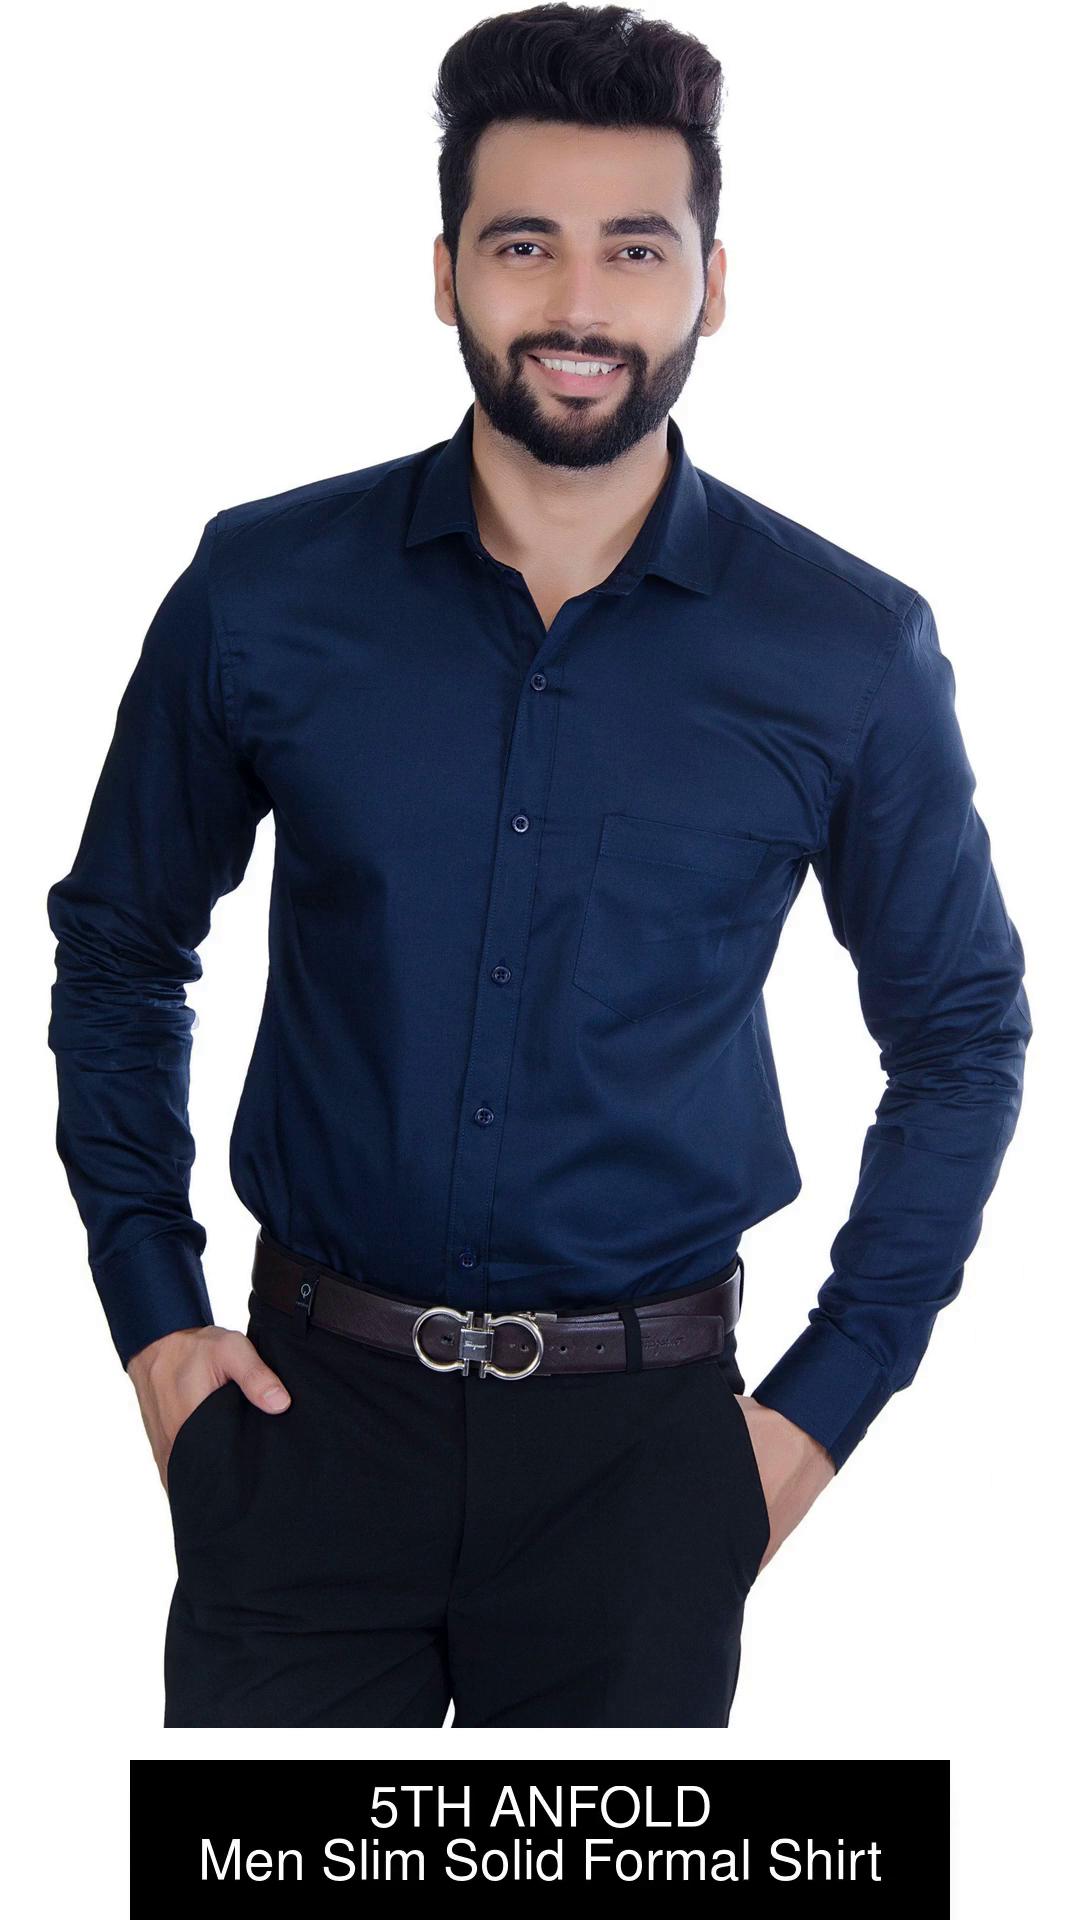 Does a blue dress shirt match black pants? - Quora